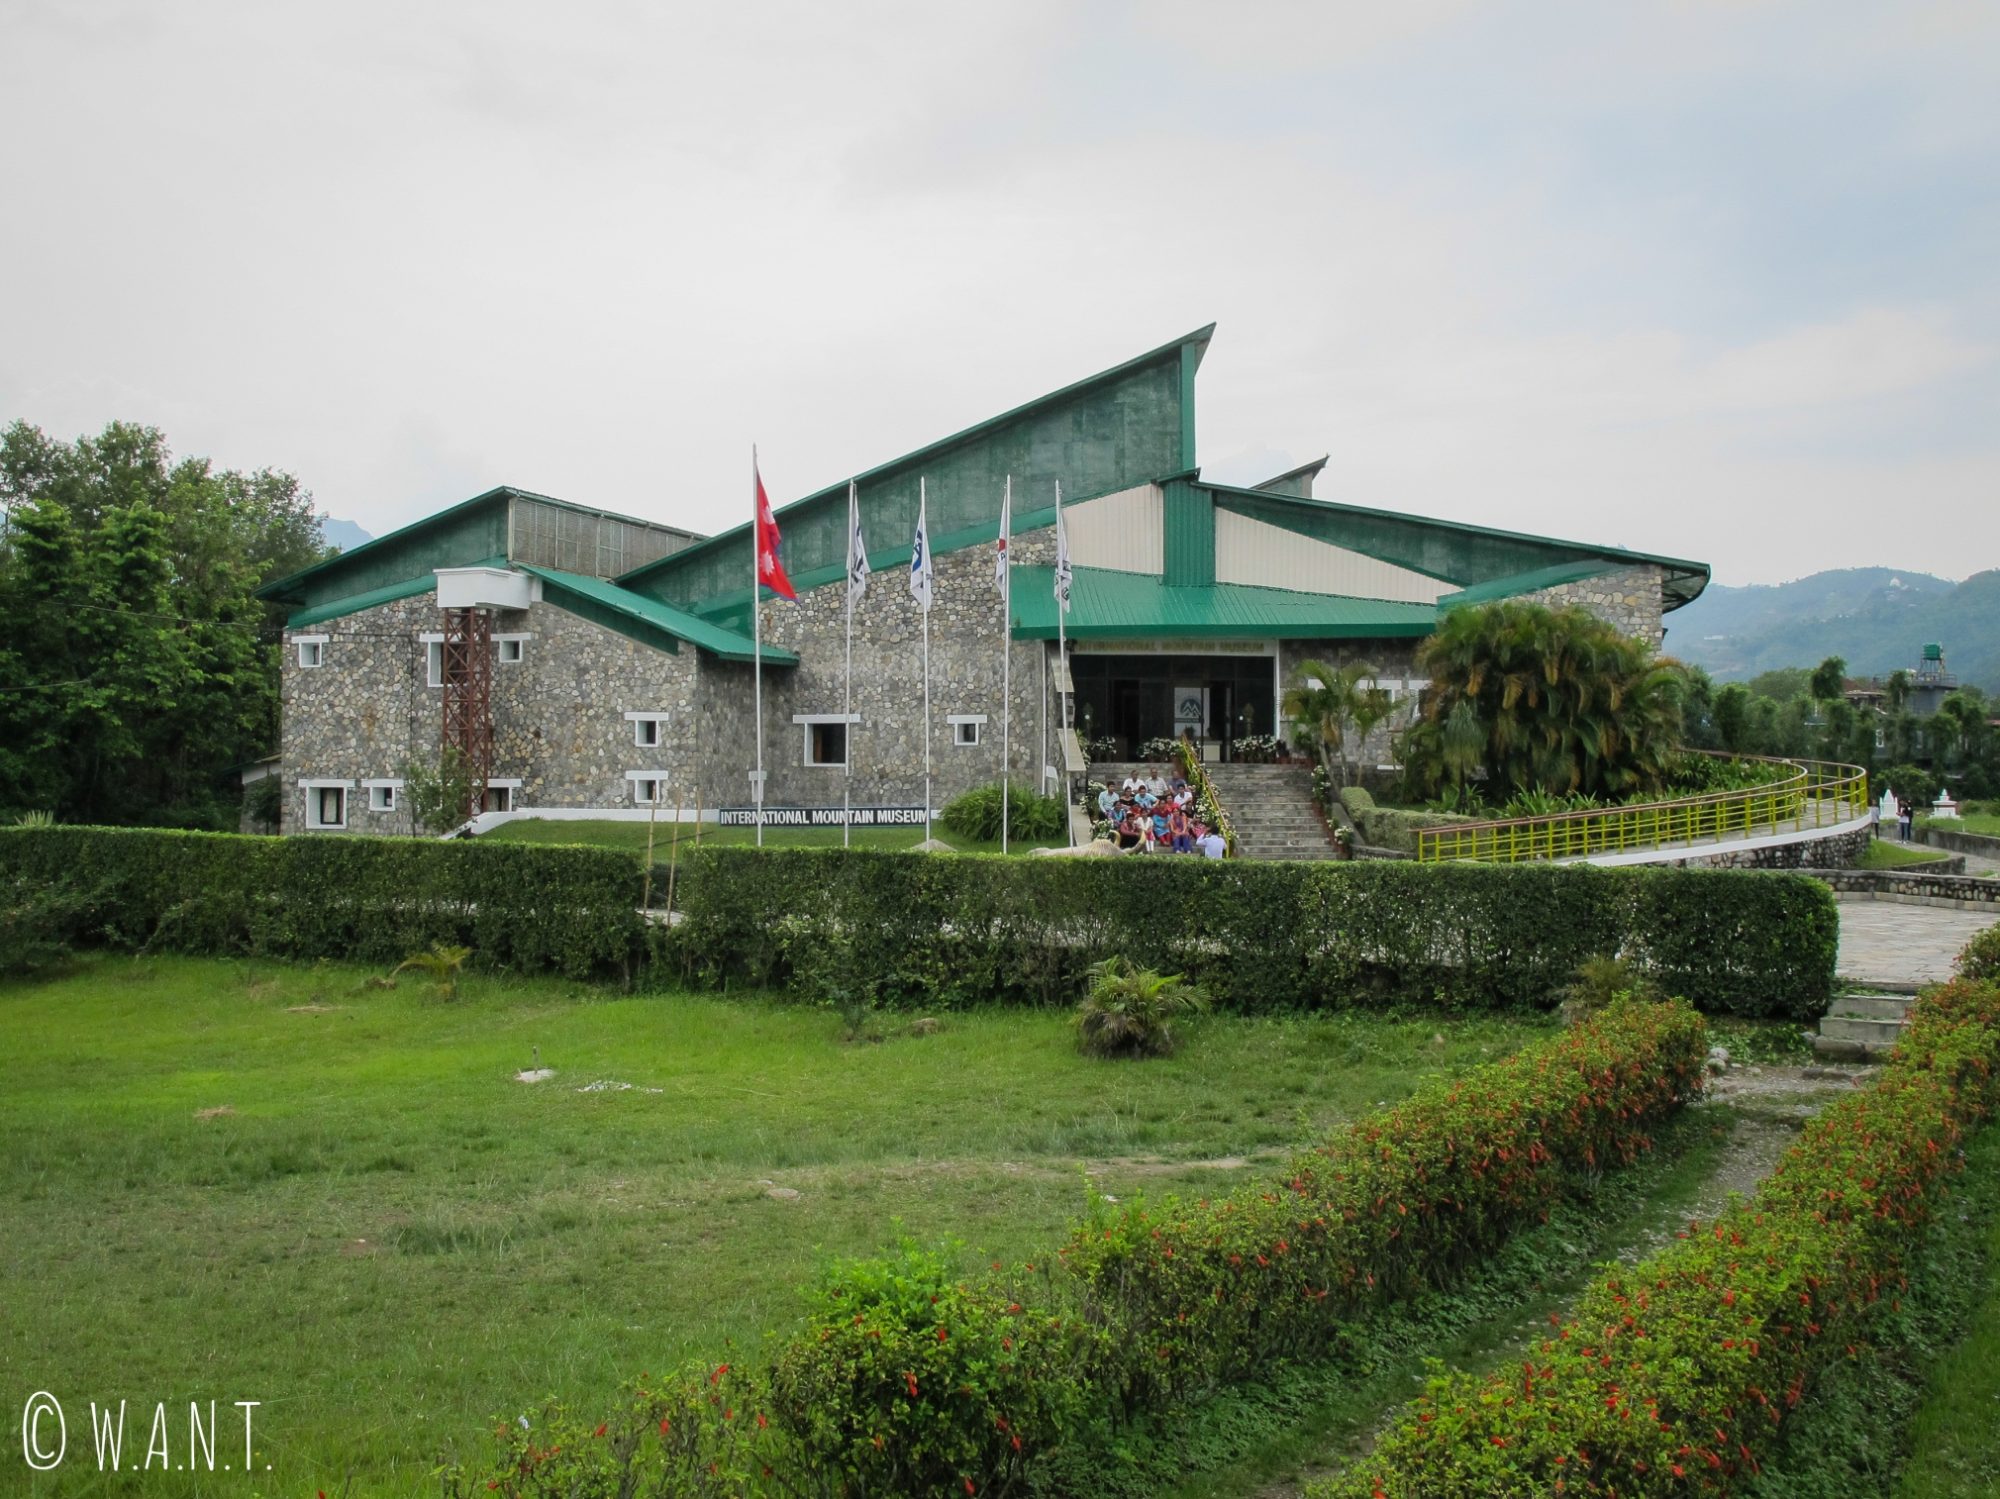 International Mountain Museum de Pokhara vu de l'extérieur